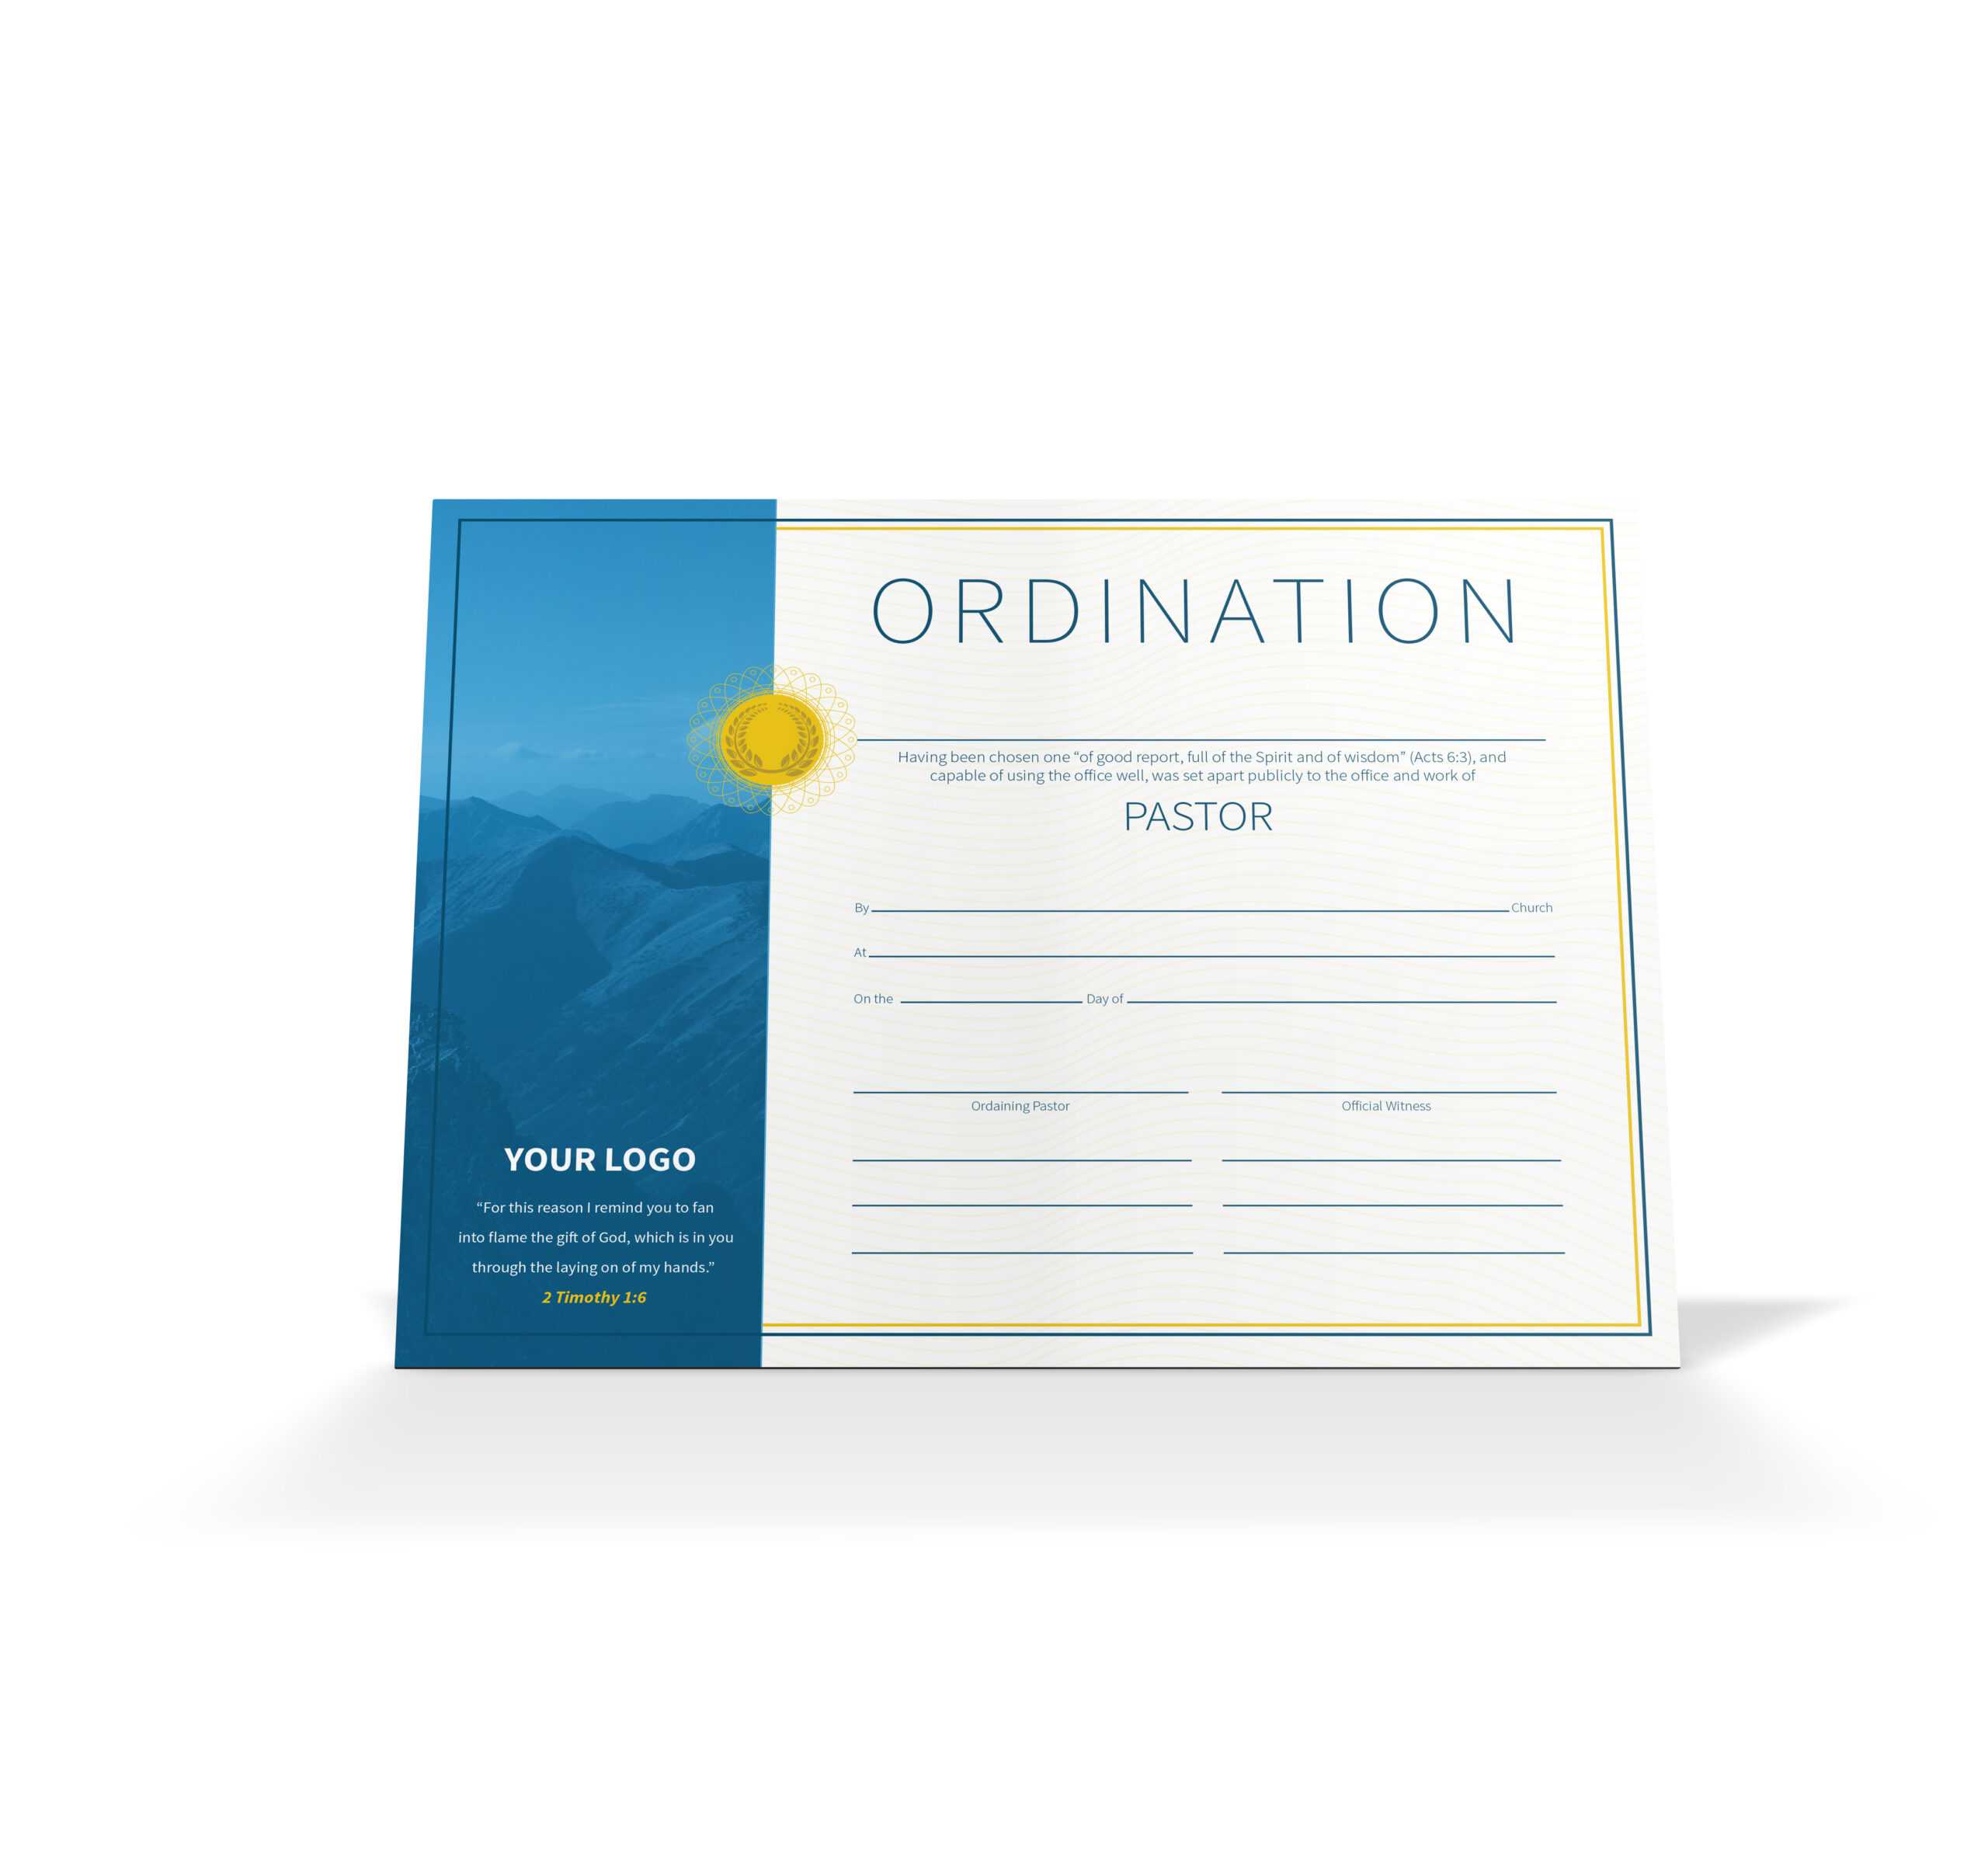 Pastor Ordination Certificate – Vineyard Digital Membership Within Ordination Certificate Templates